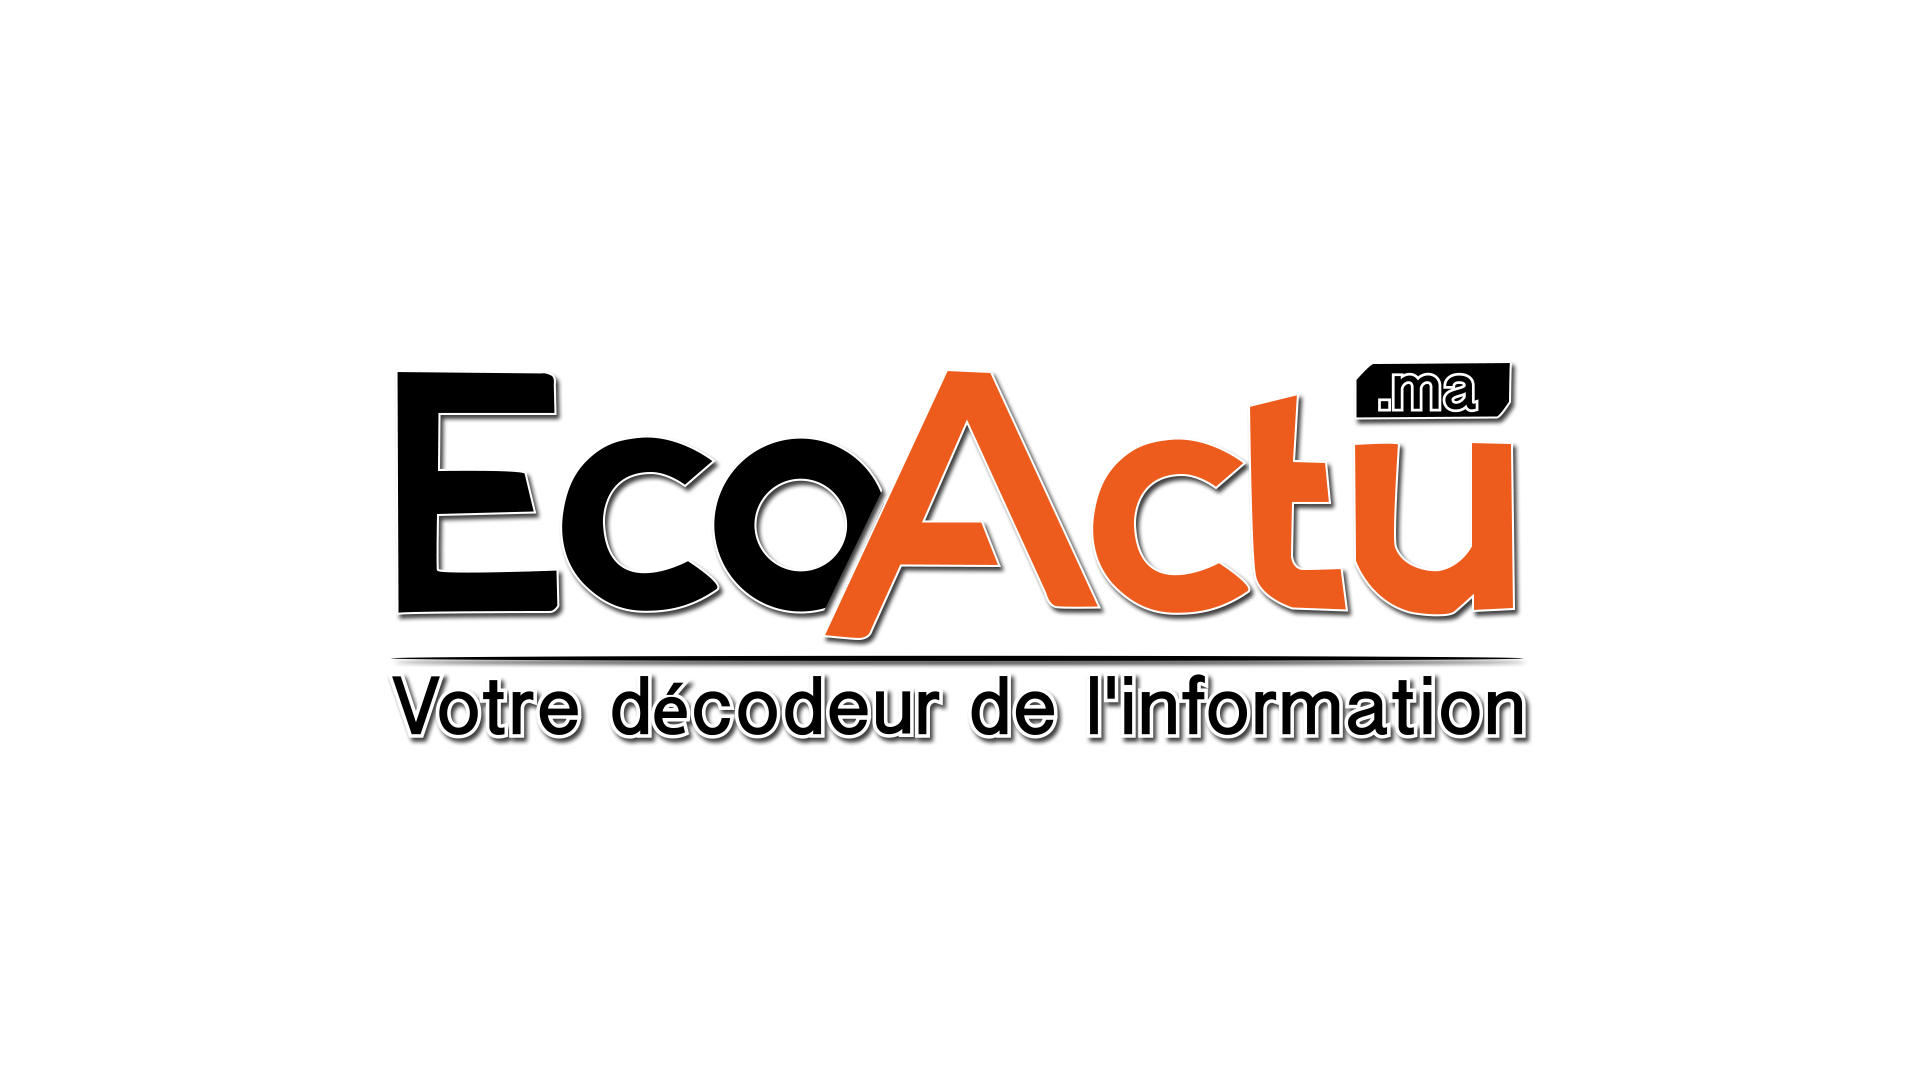 EcoActu